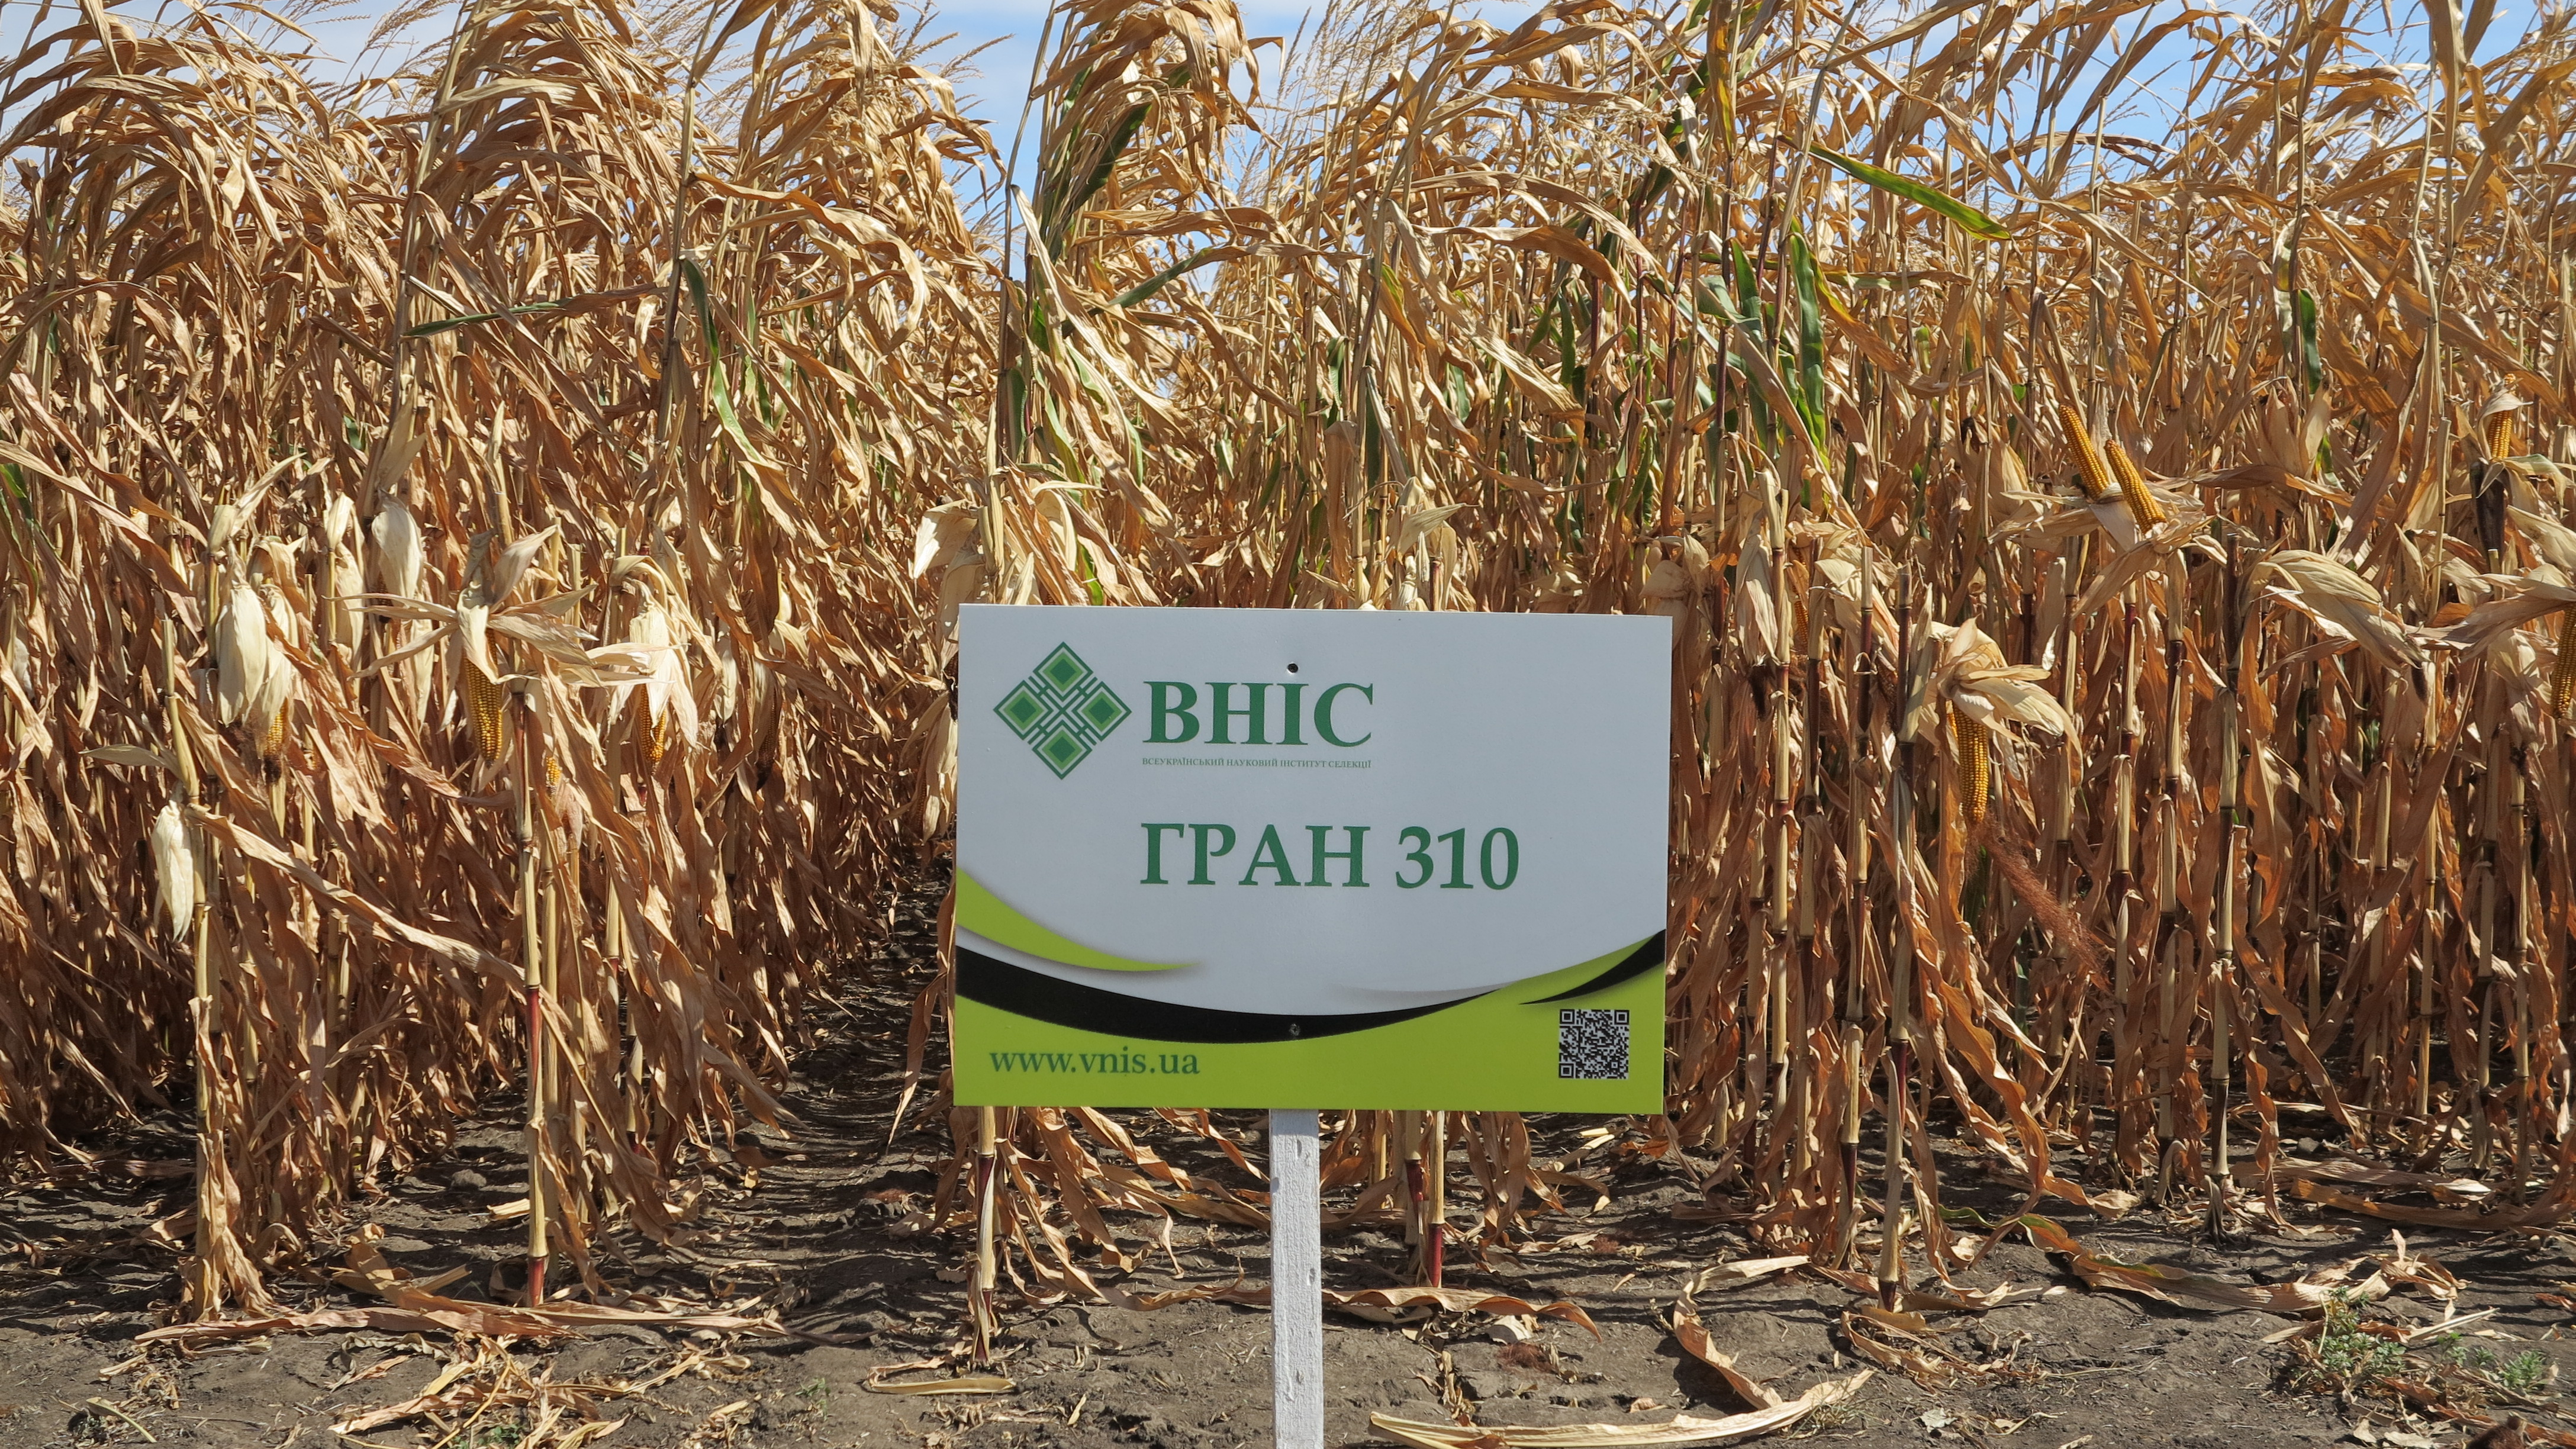 Семена кукурузы  Гран 310 (ФАО 250) напрямую от ВНИС